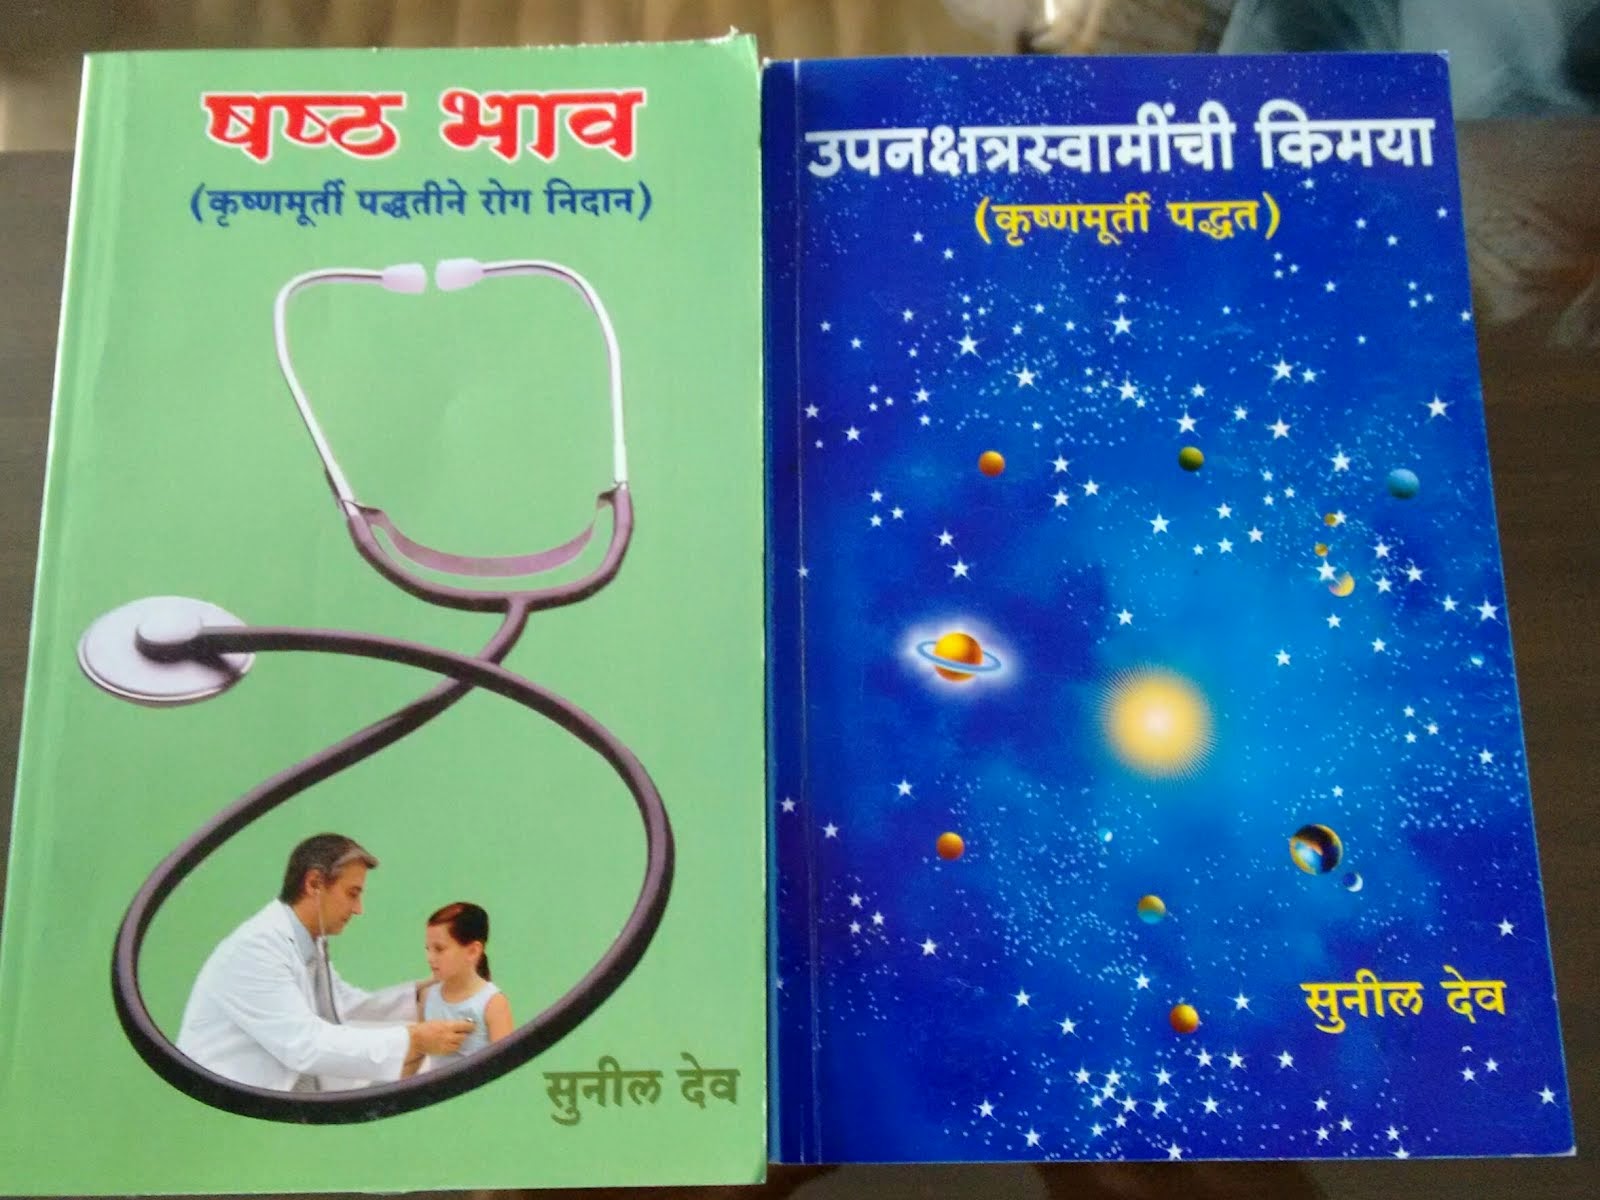 Sunil Deo's books